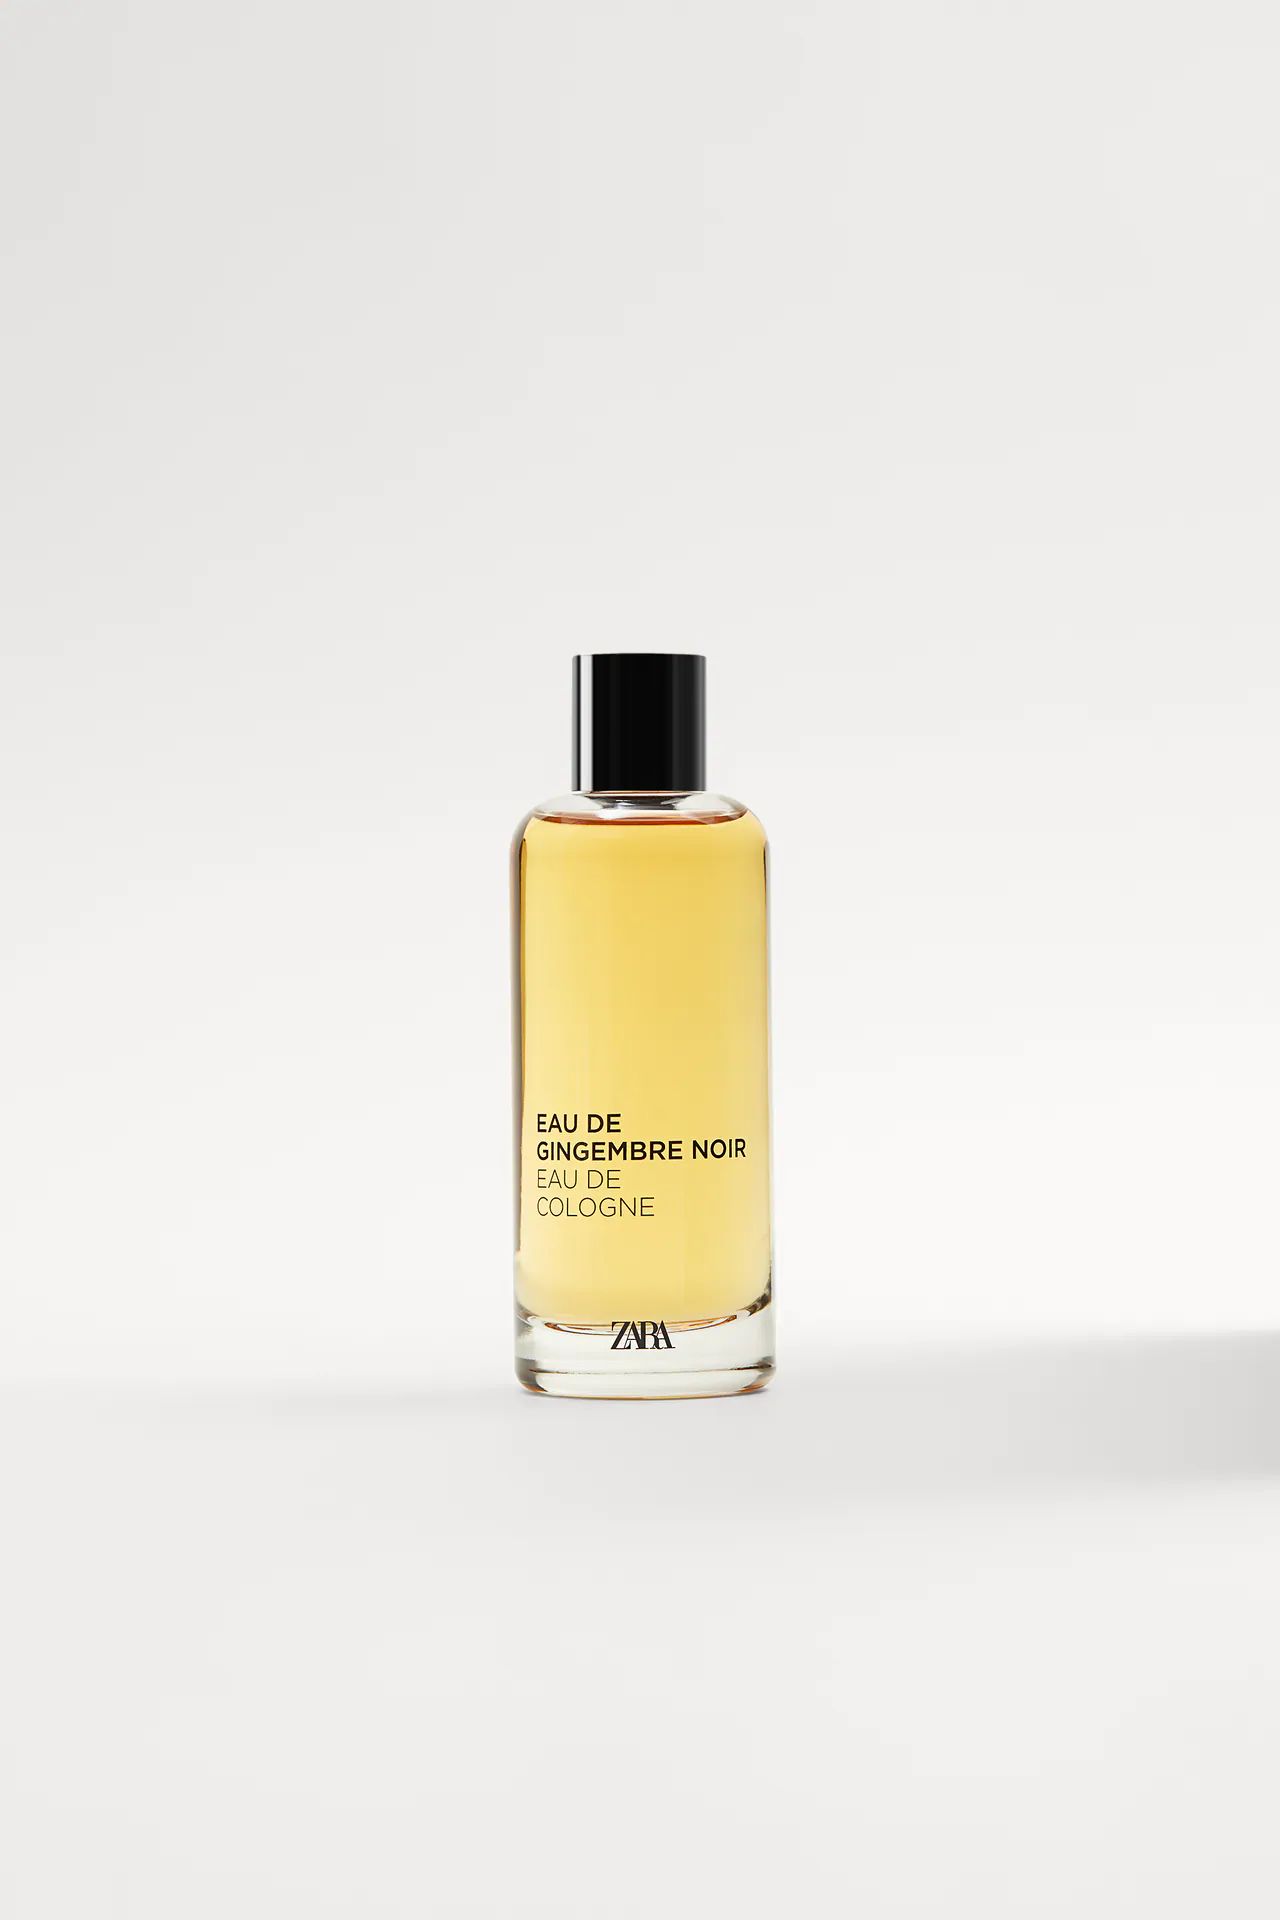 Eau de Gingembre Noir Zara cologne - a fragrance for men 2021